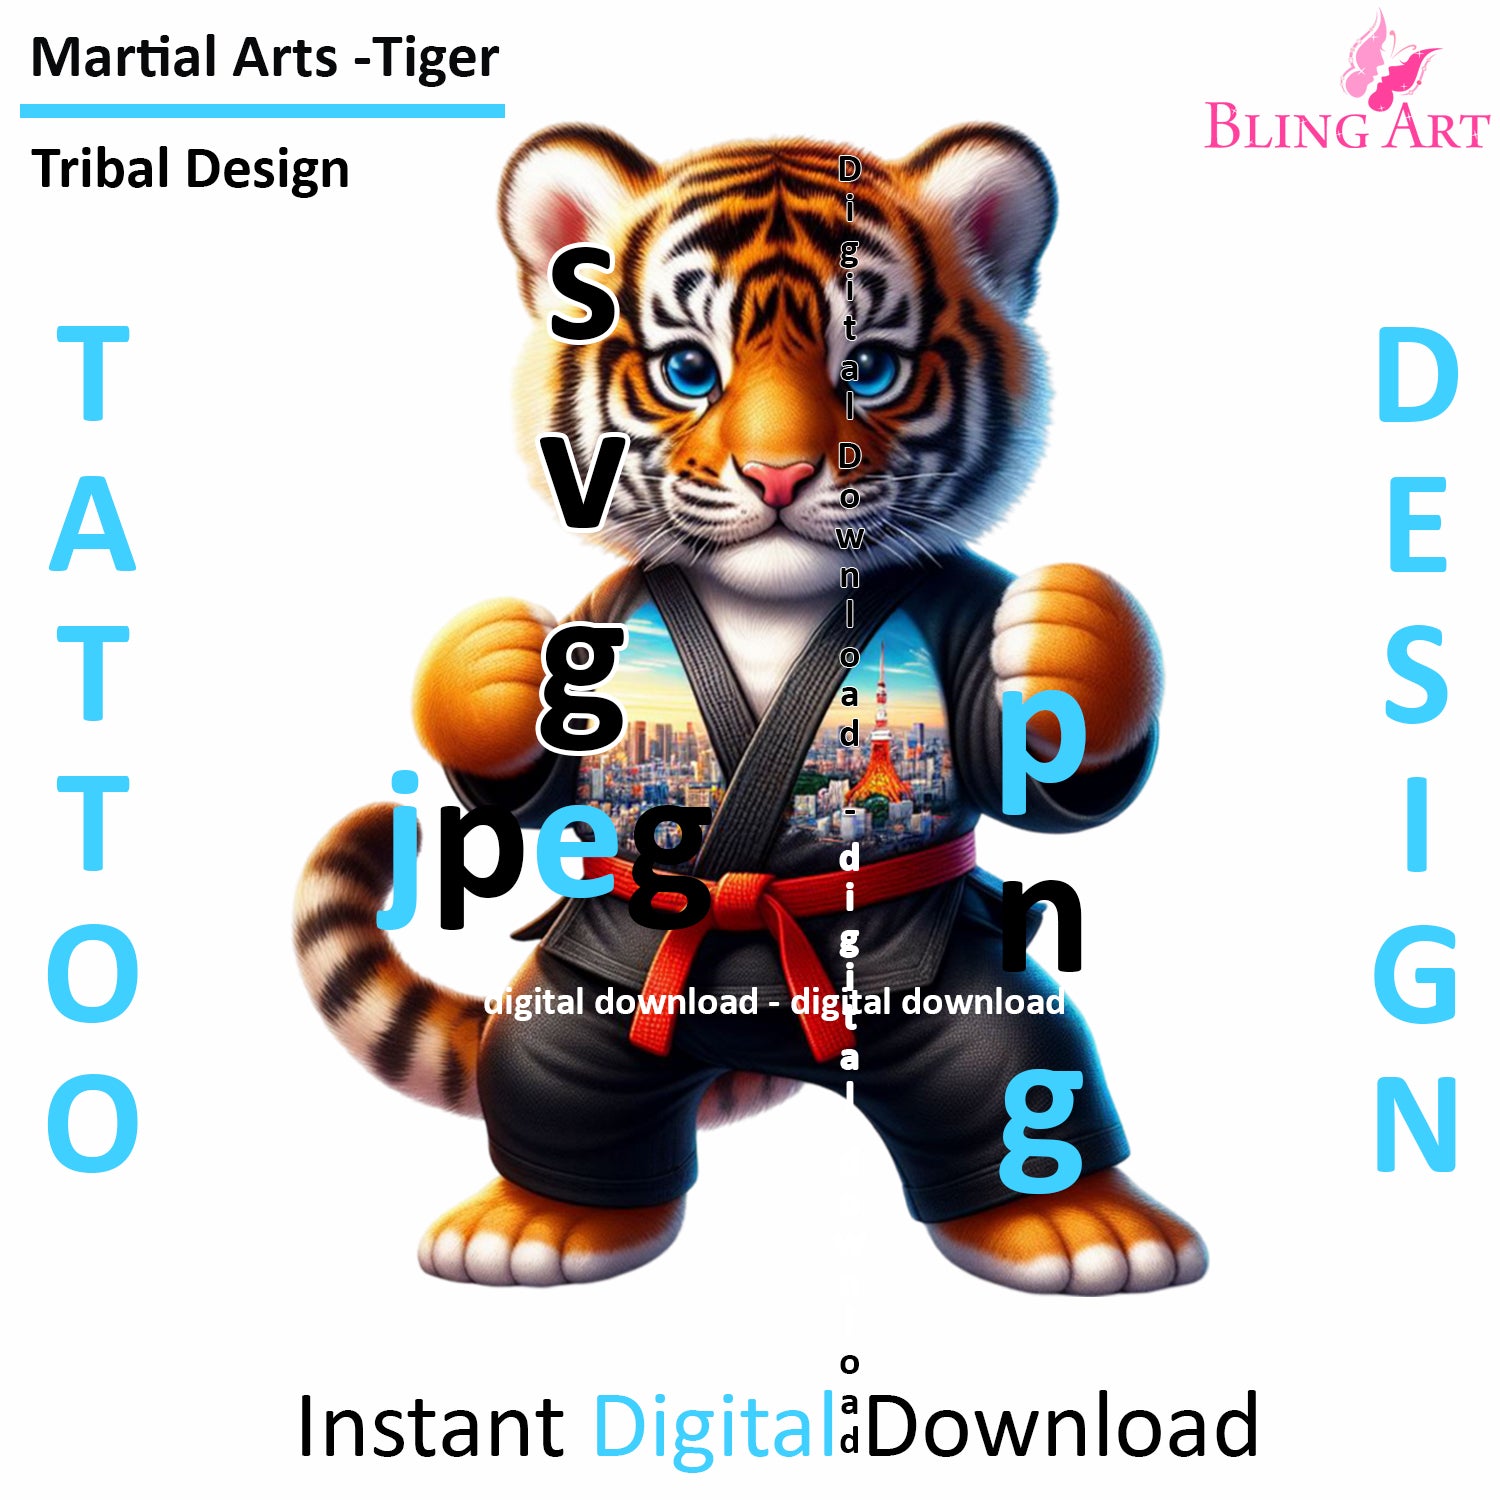 Tiger Martial Arts Tribal Tattoo Art - Digital Design (PNG, JPEG, SVG) - Instant Download for Tattoos, T-Shirts, Wall Art